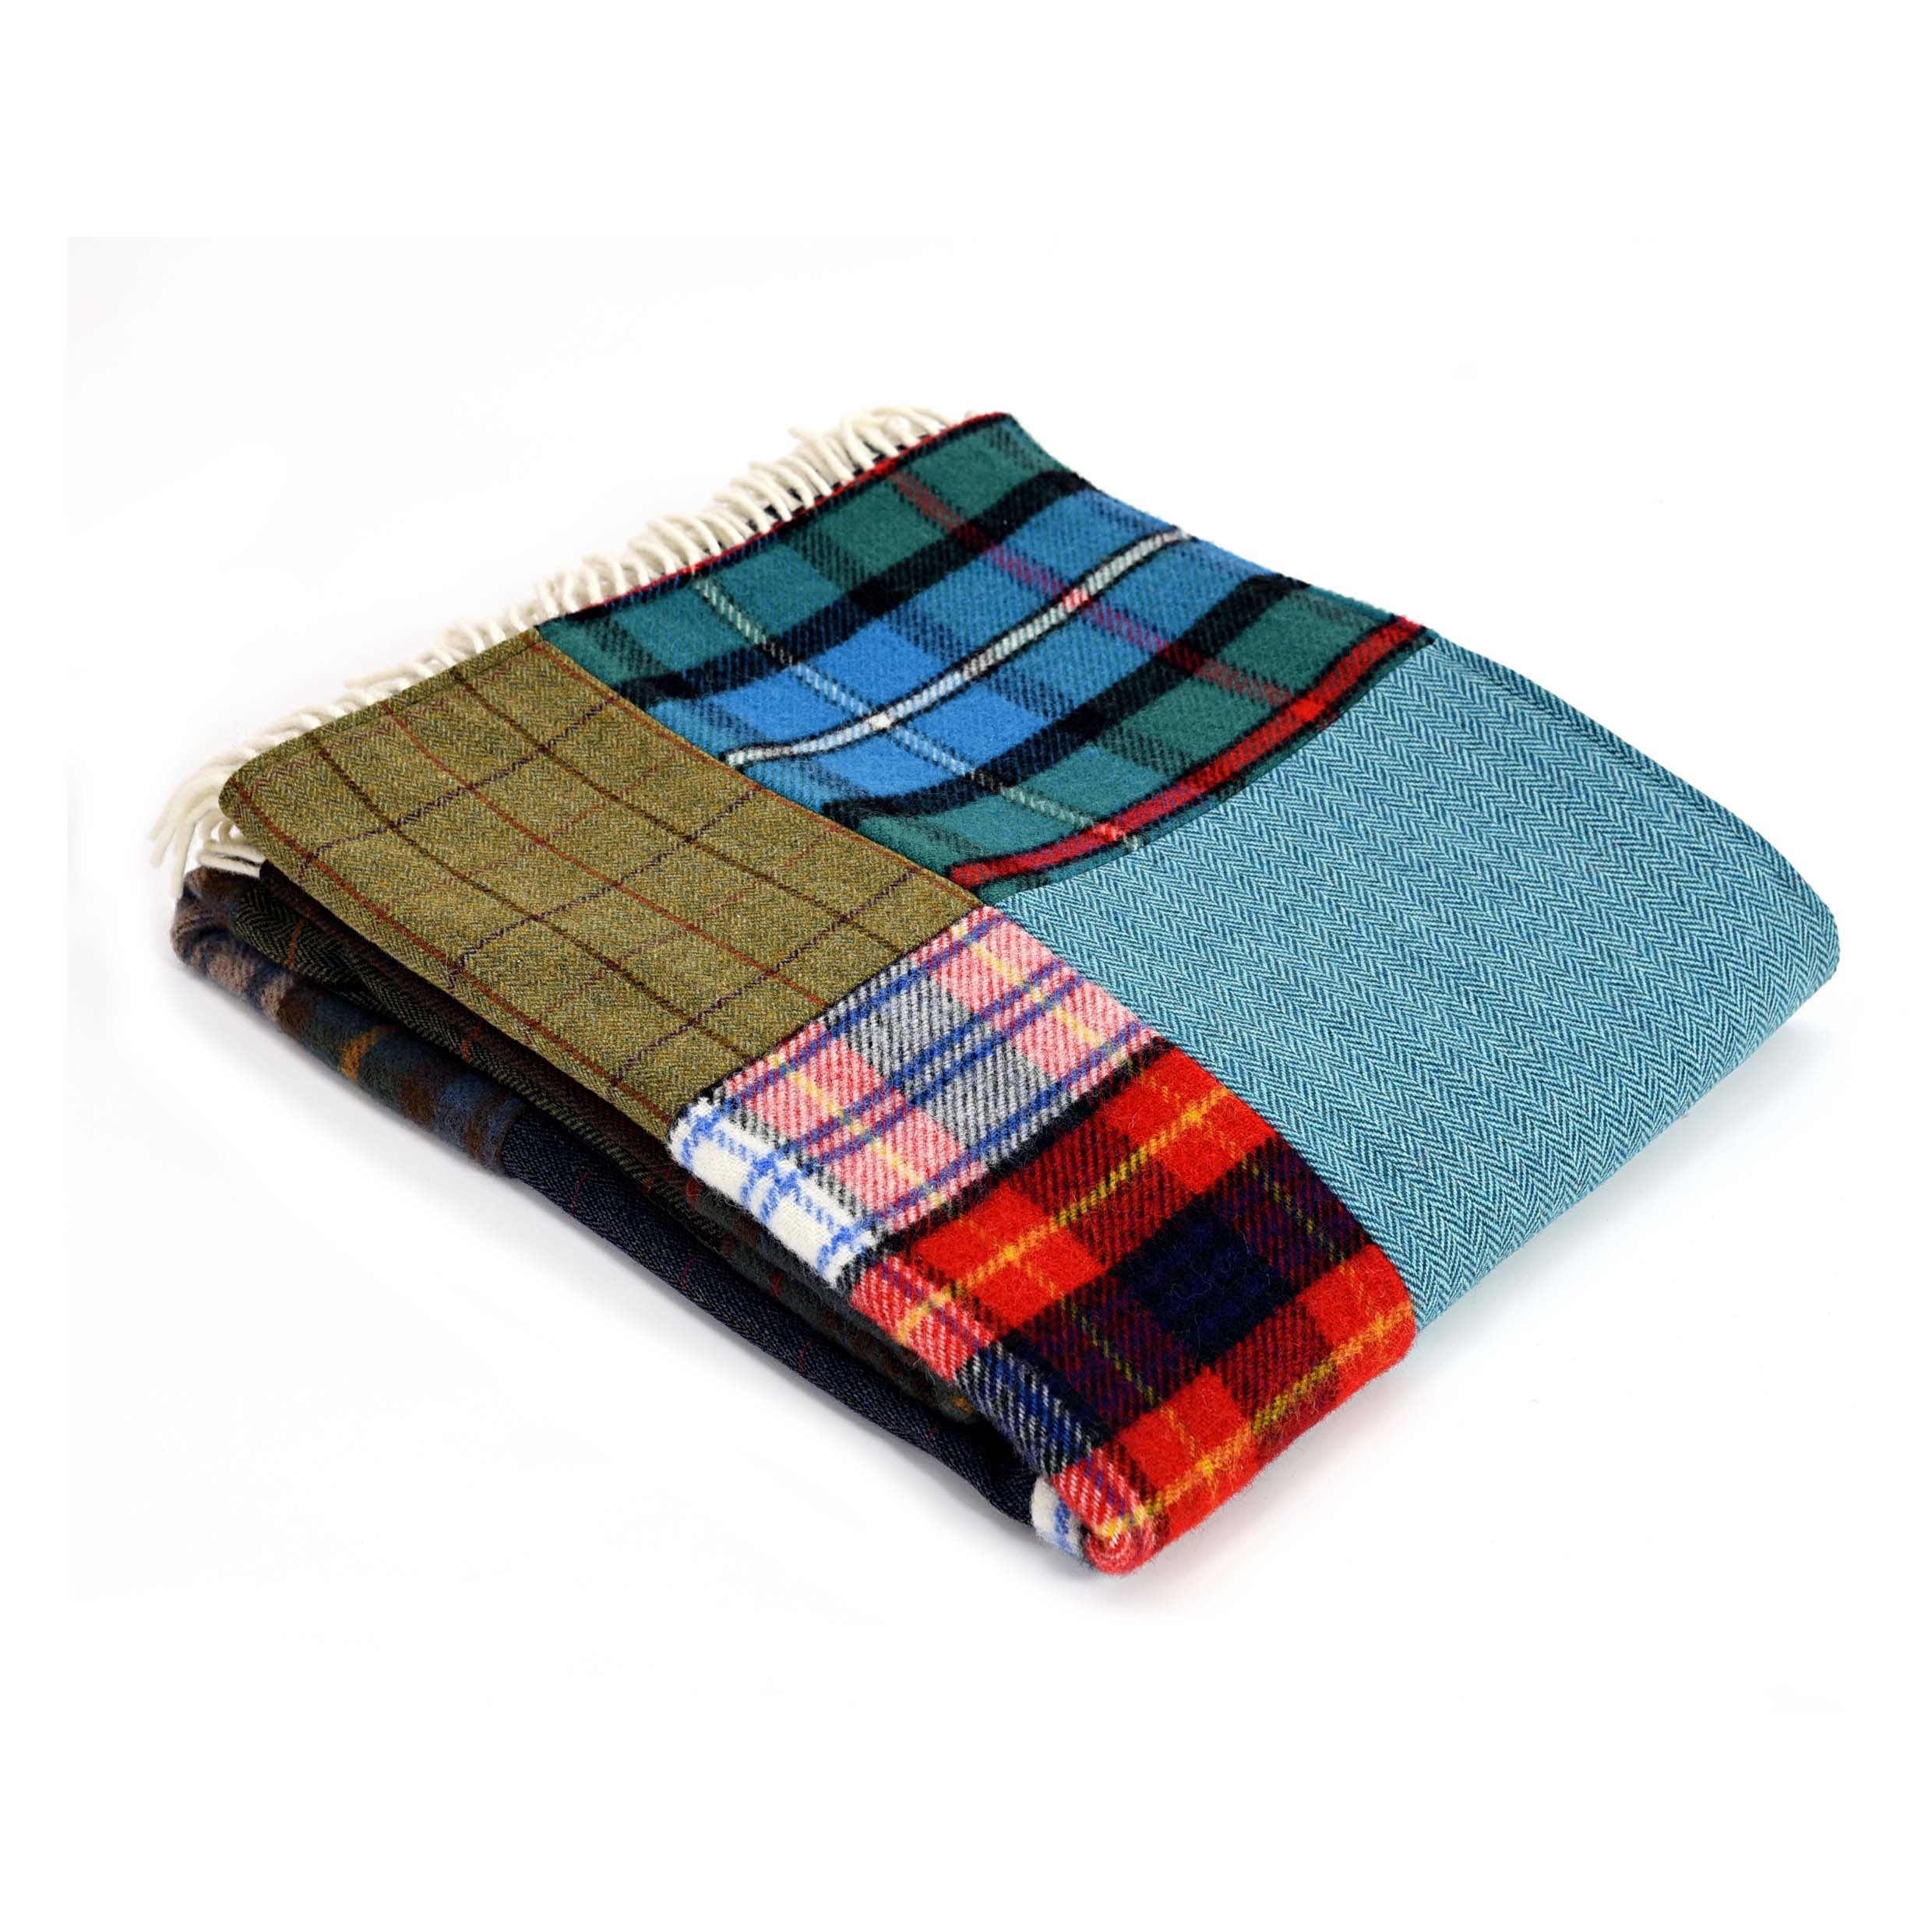 Tartan & Tweed Patchwork Wool Throw - The Nancy Smillie Shop - Art, Jewellery & Designer Gifts Glasgow